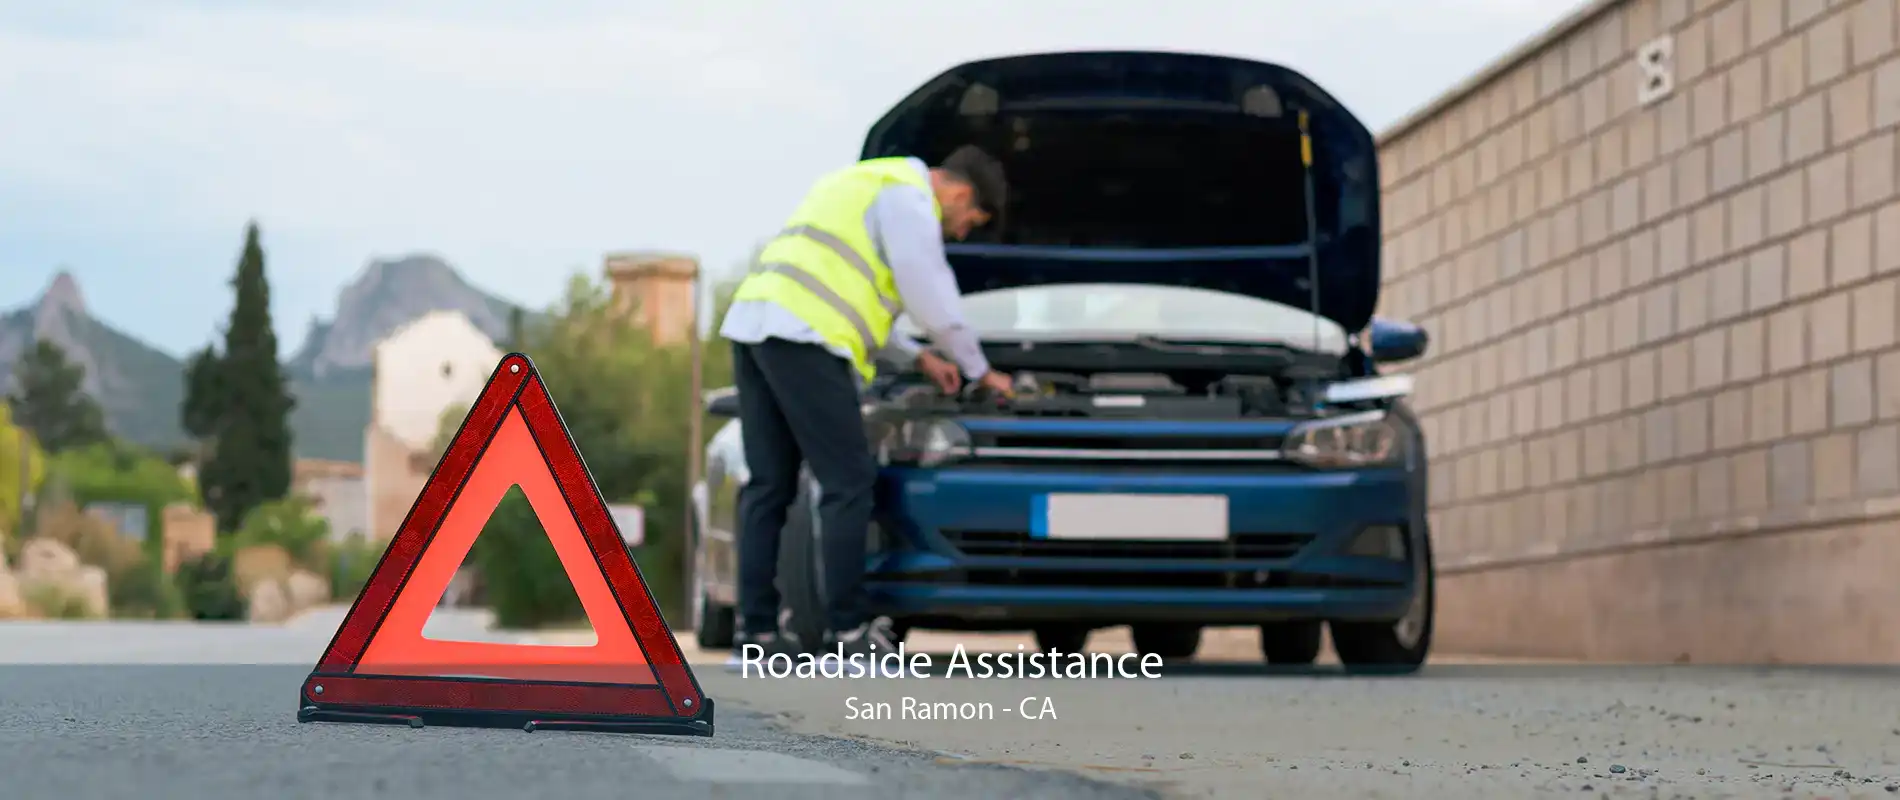 Roadside Assistance San Ramon - CA